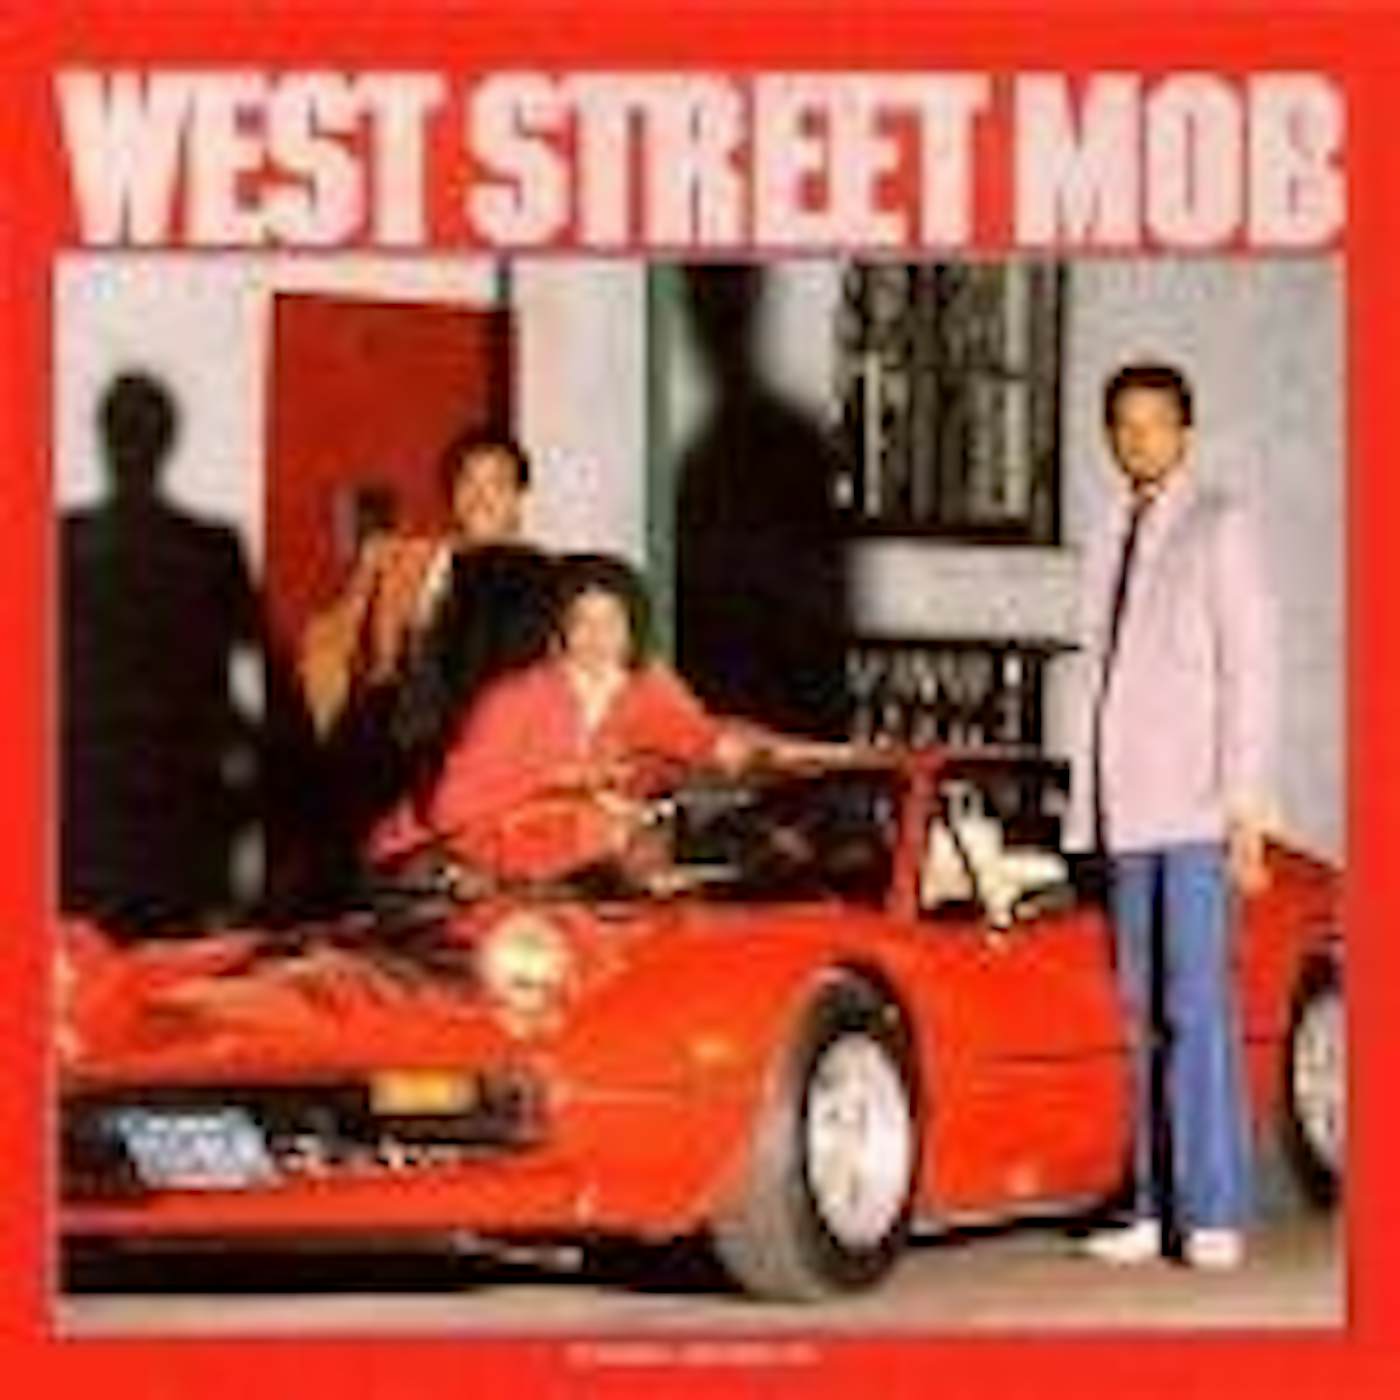 West Street Mob Vinyl Record